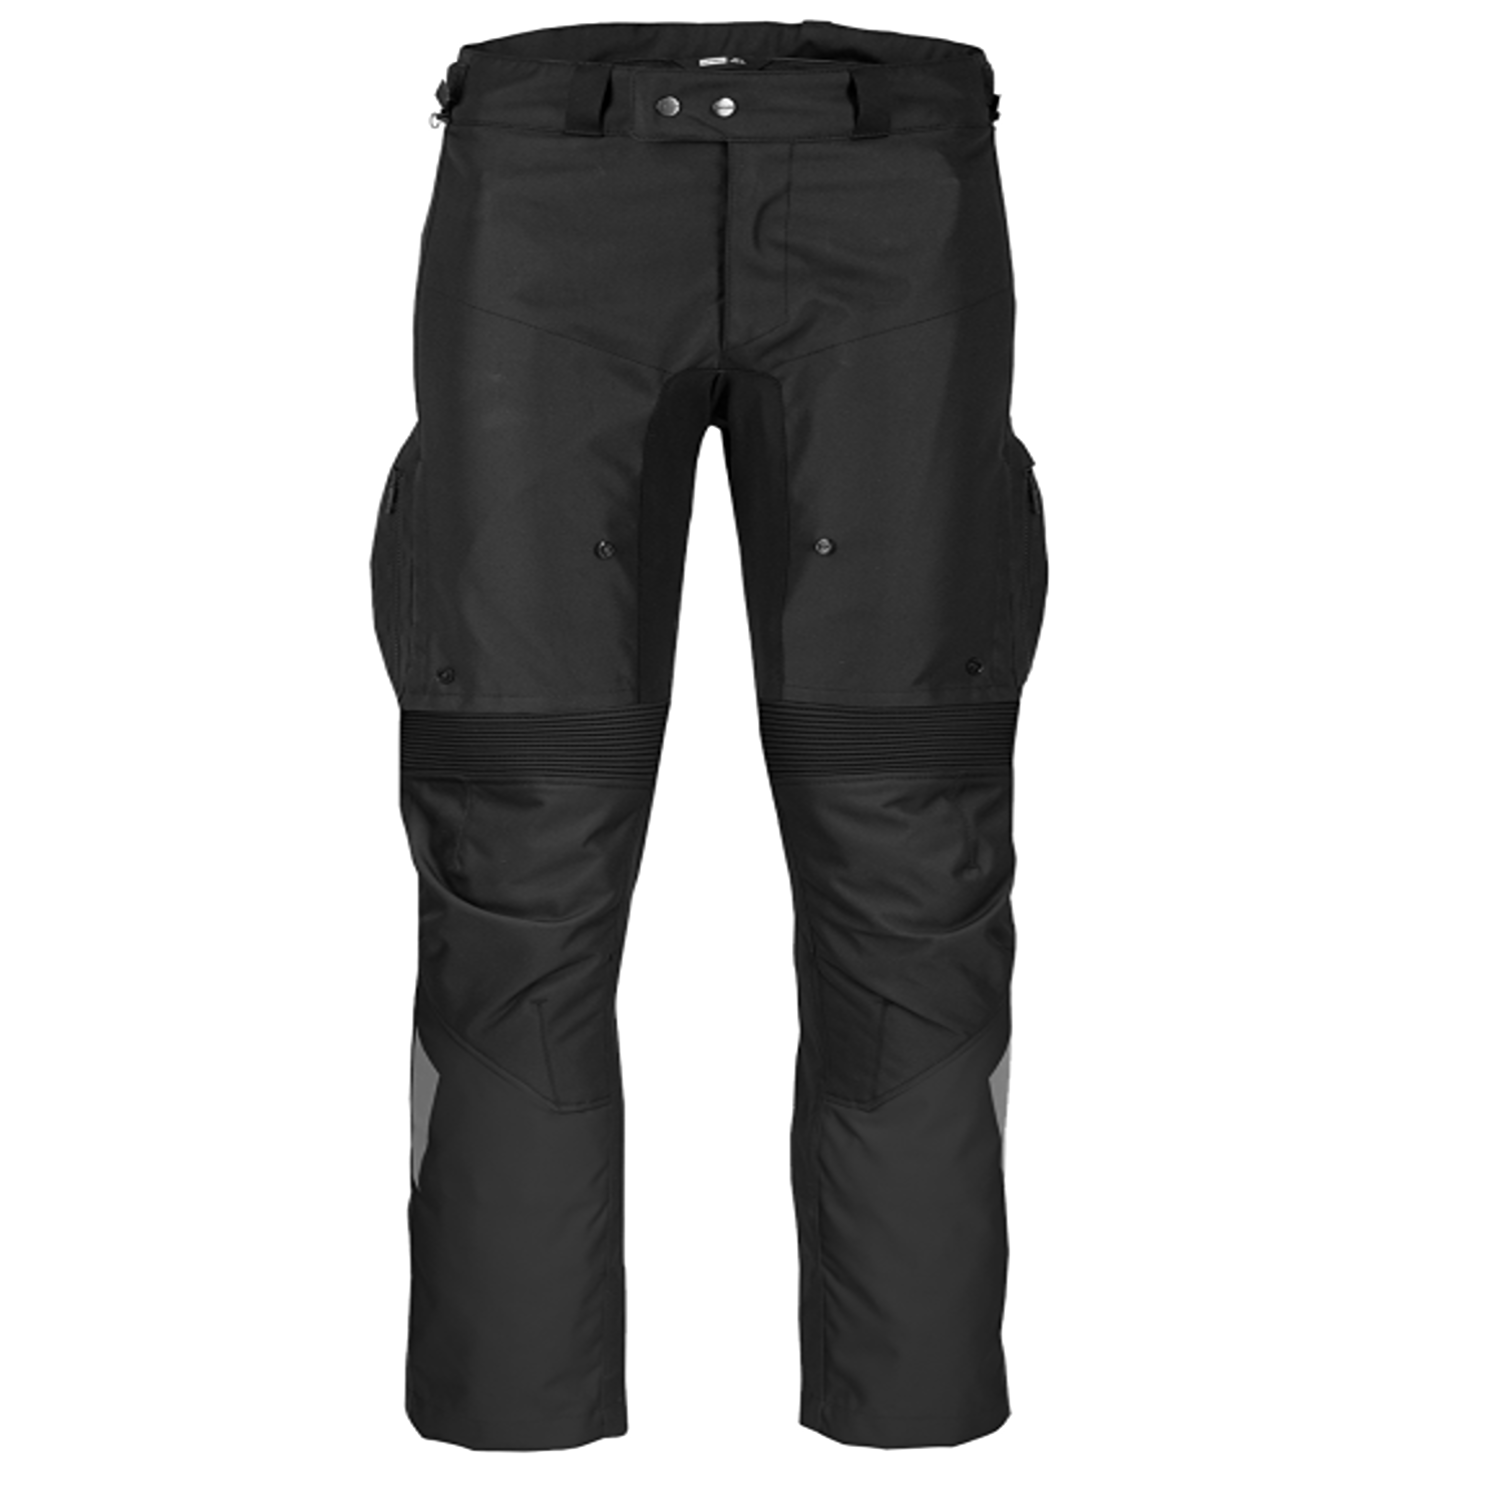 Image of Spidi Crossmaster Short Pants Black Size 3XL ID 8030161463859